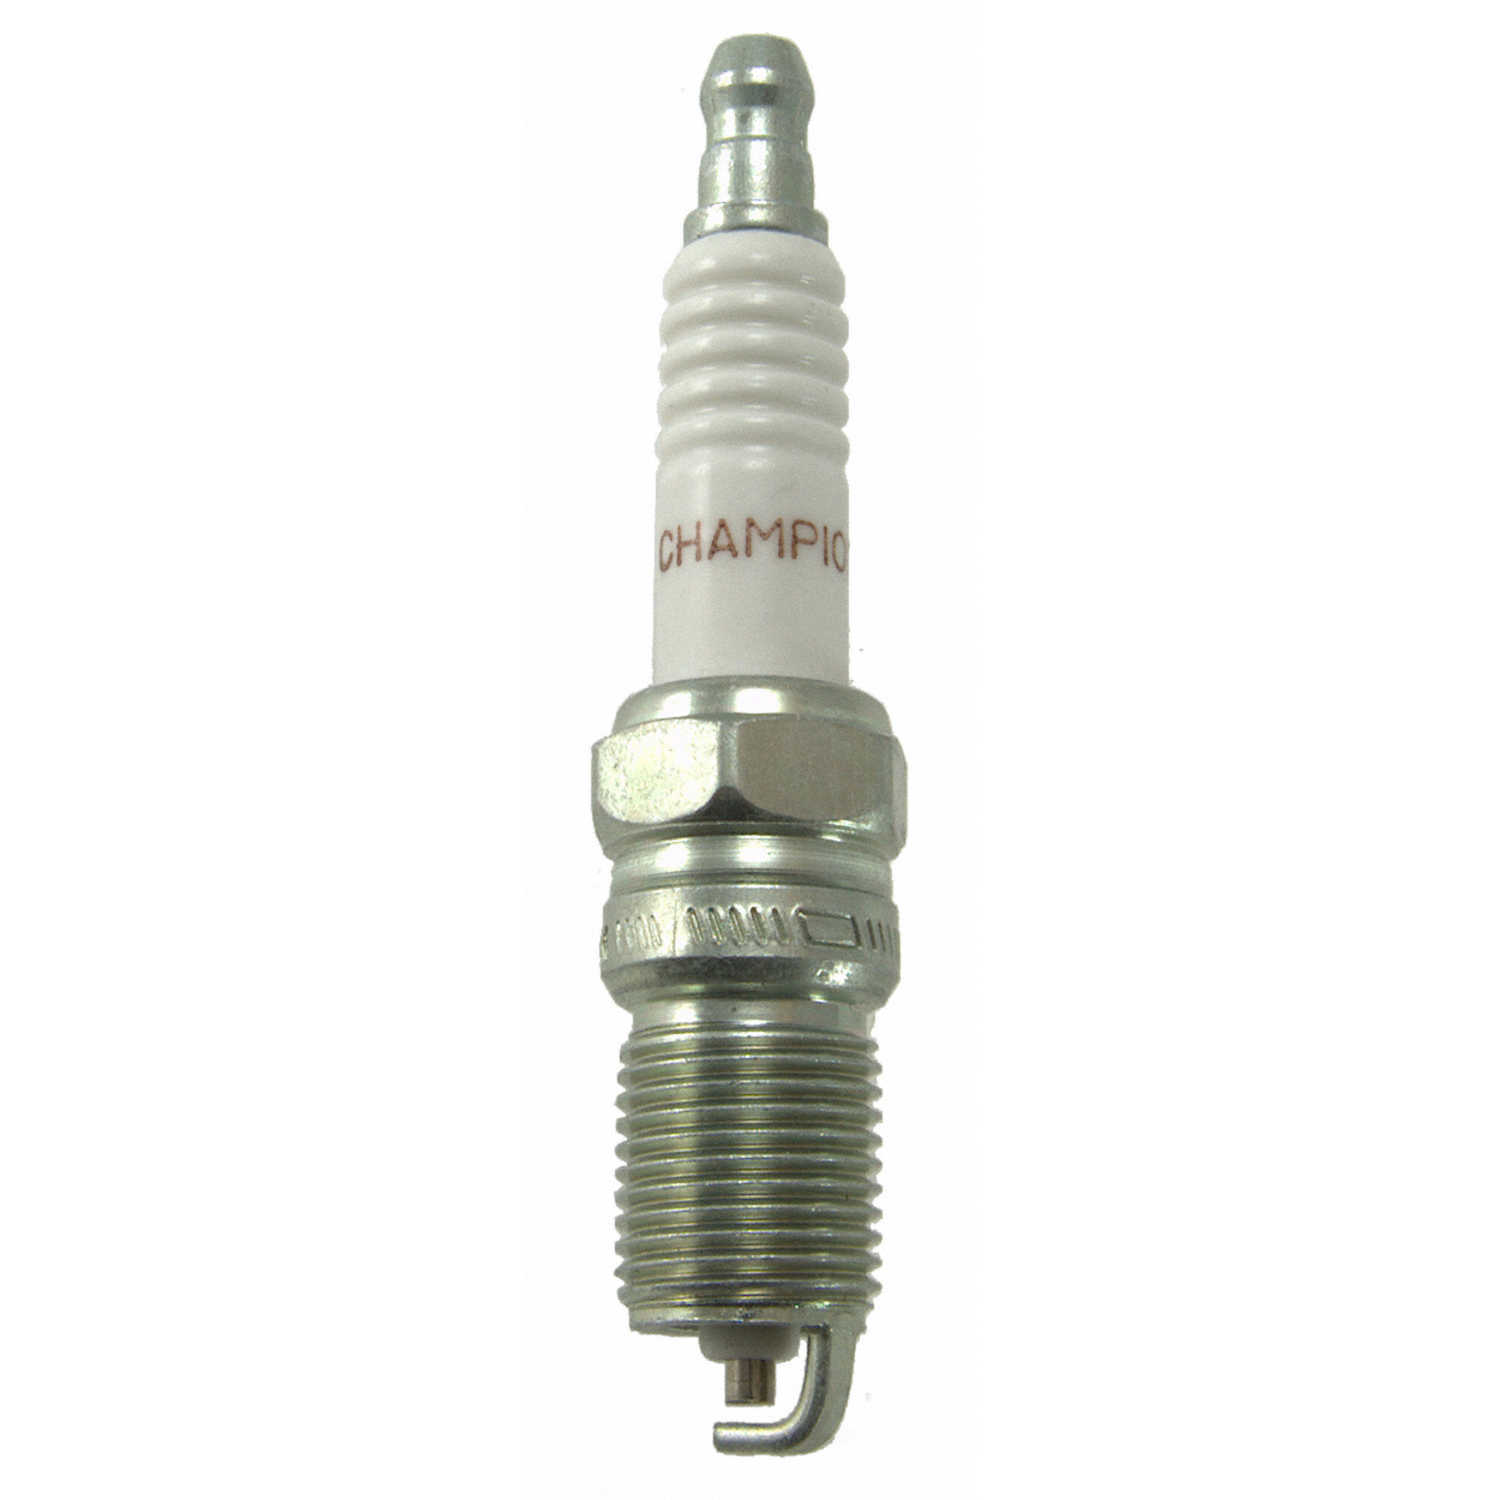 CHAMPION SPARK PLUGS - Copper Plus Spark Plug - CHA 304